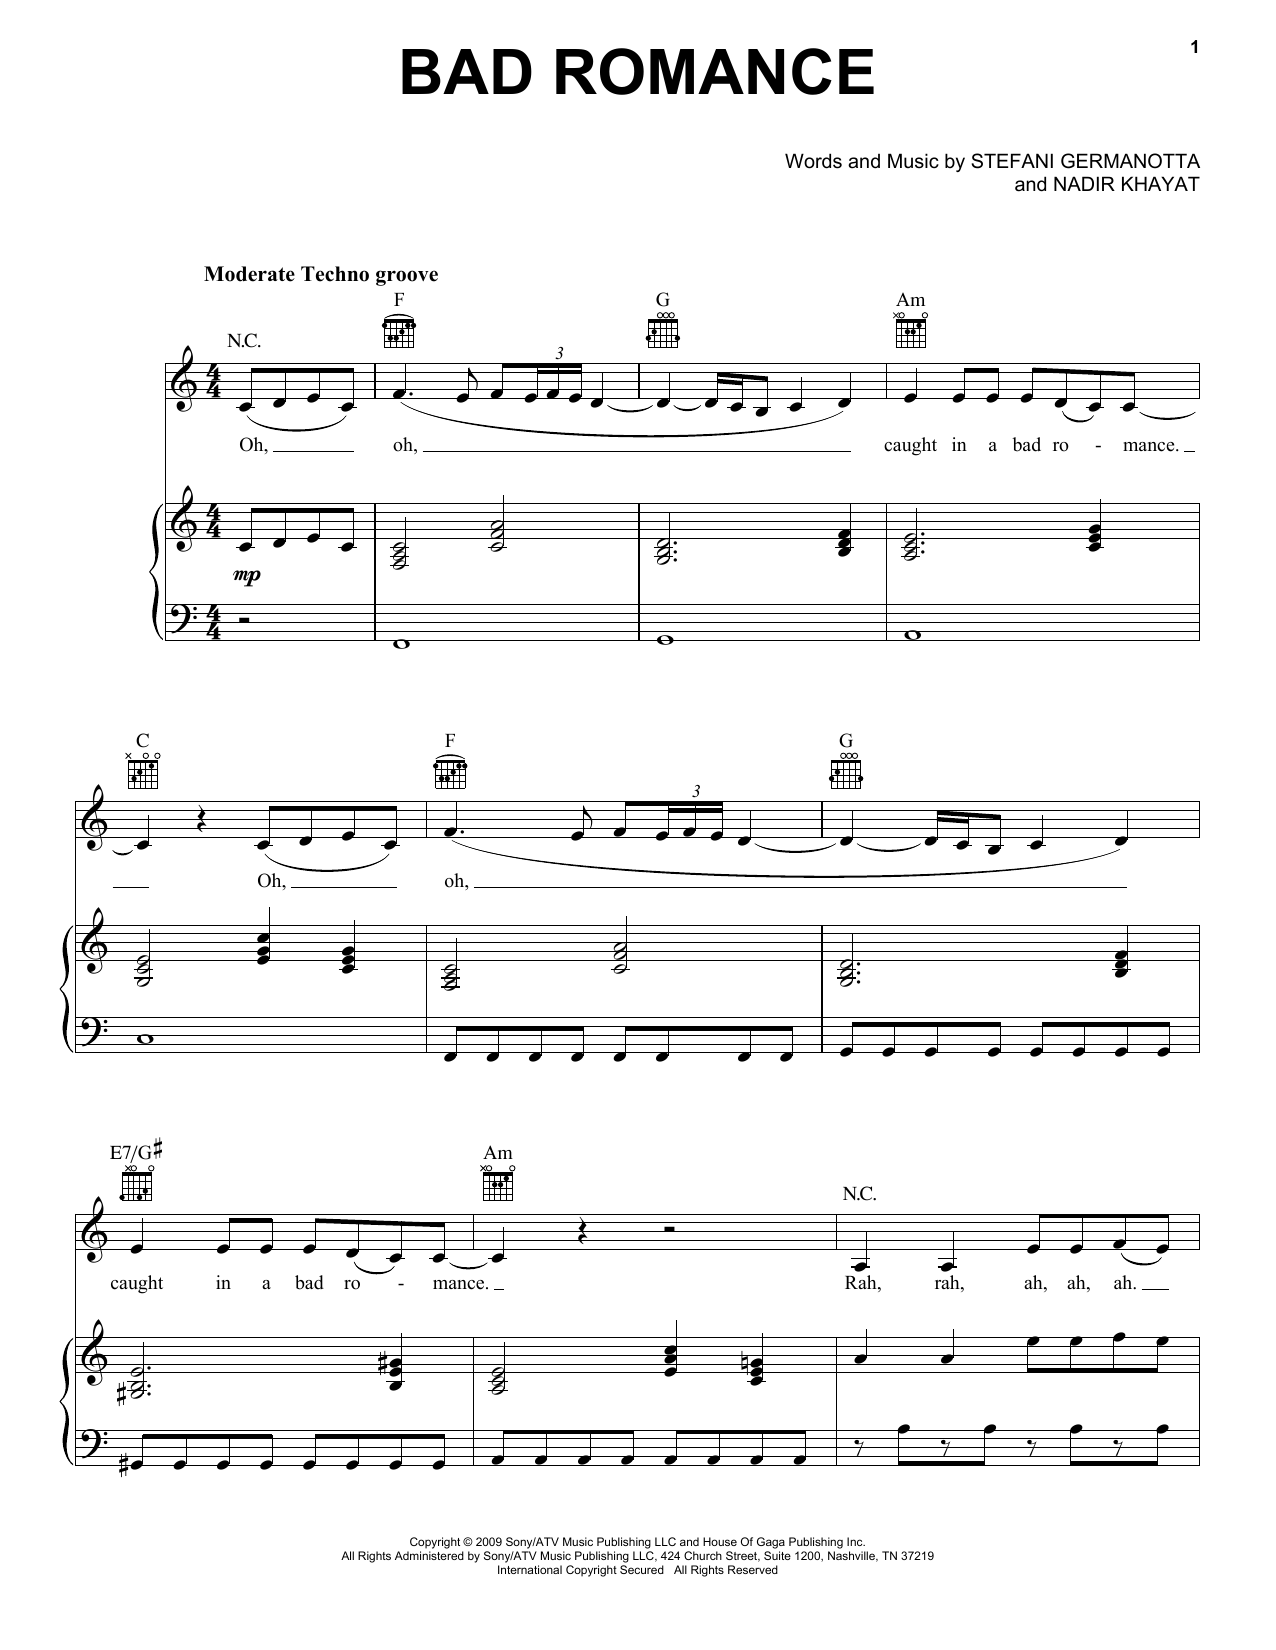 Lady Gaga Bad Romance Sheet Music Notes & Chords for Clarinet - Download or Print PDF